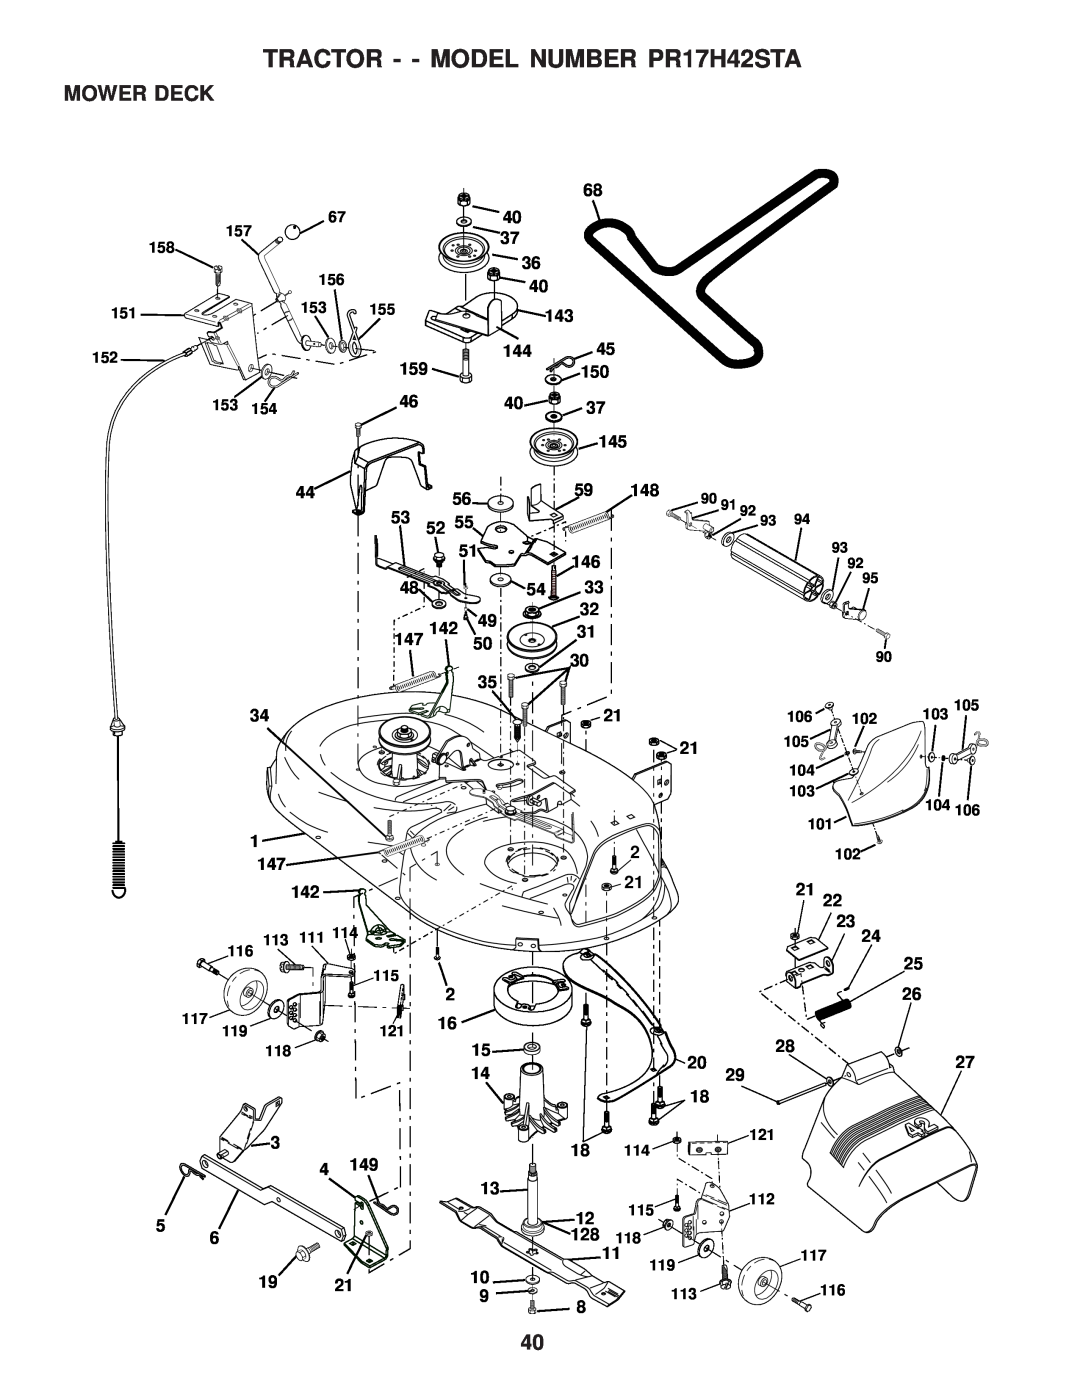 Poulan 173304 owner manual Mower Deck, TRACTOR - - MODEL NUMBER PR17H42STA 